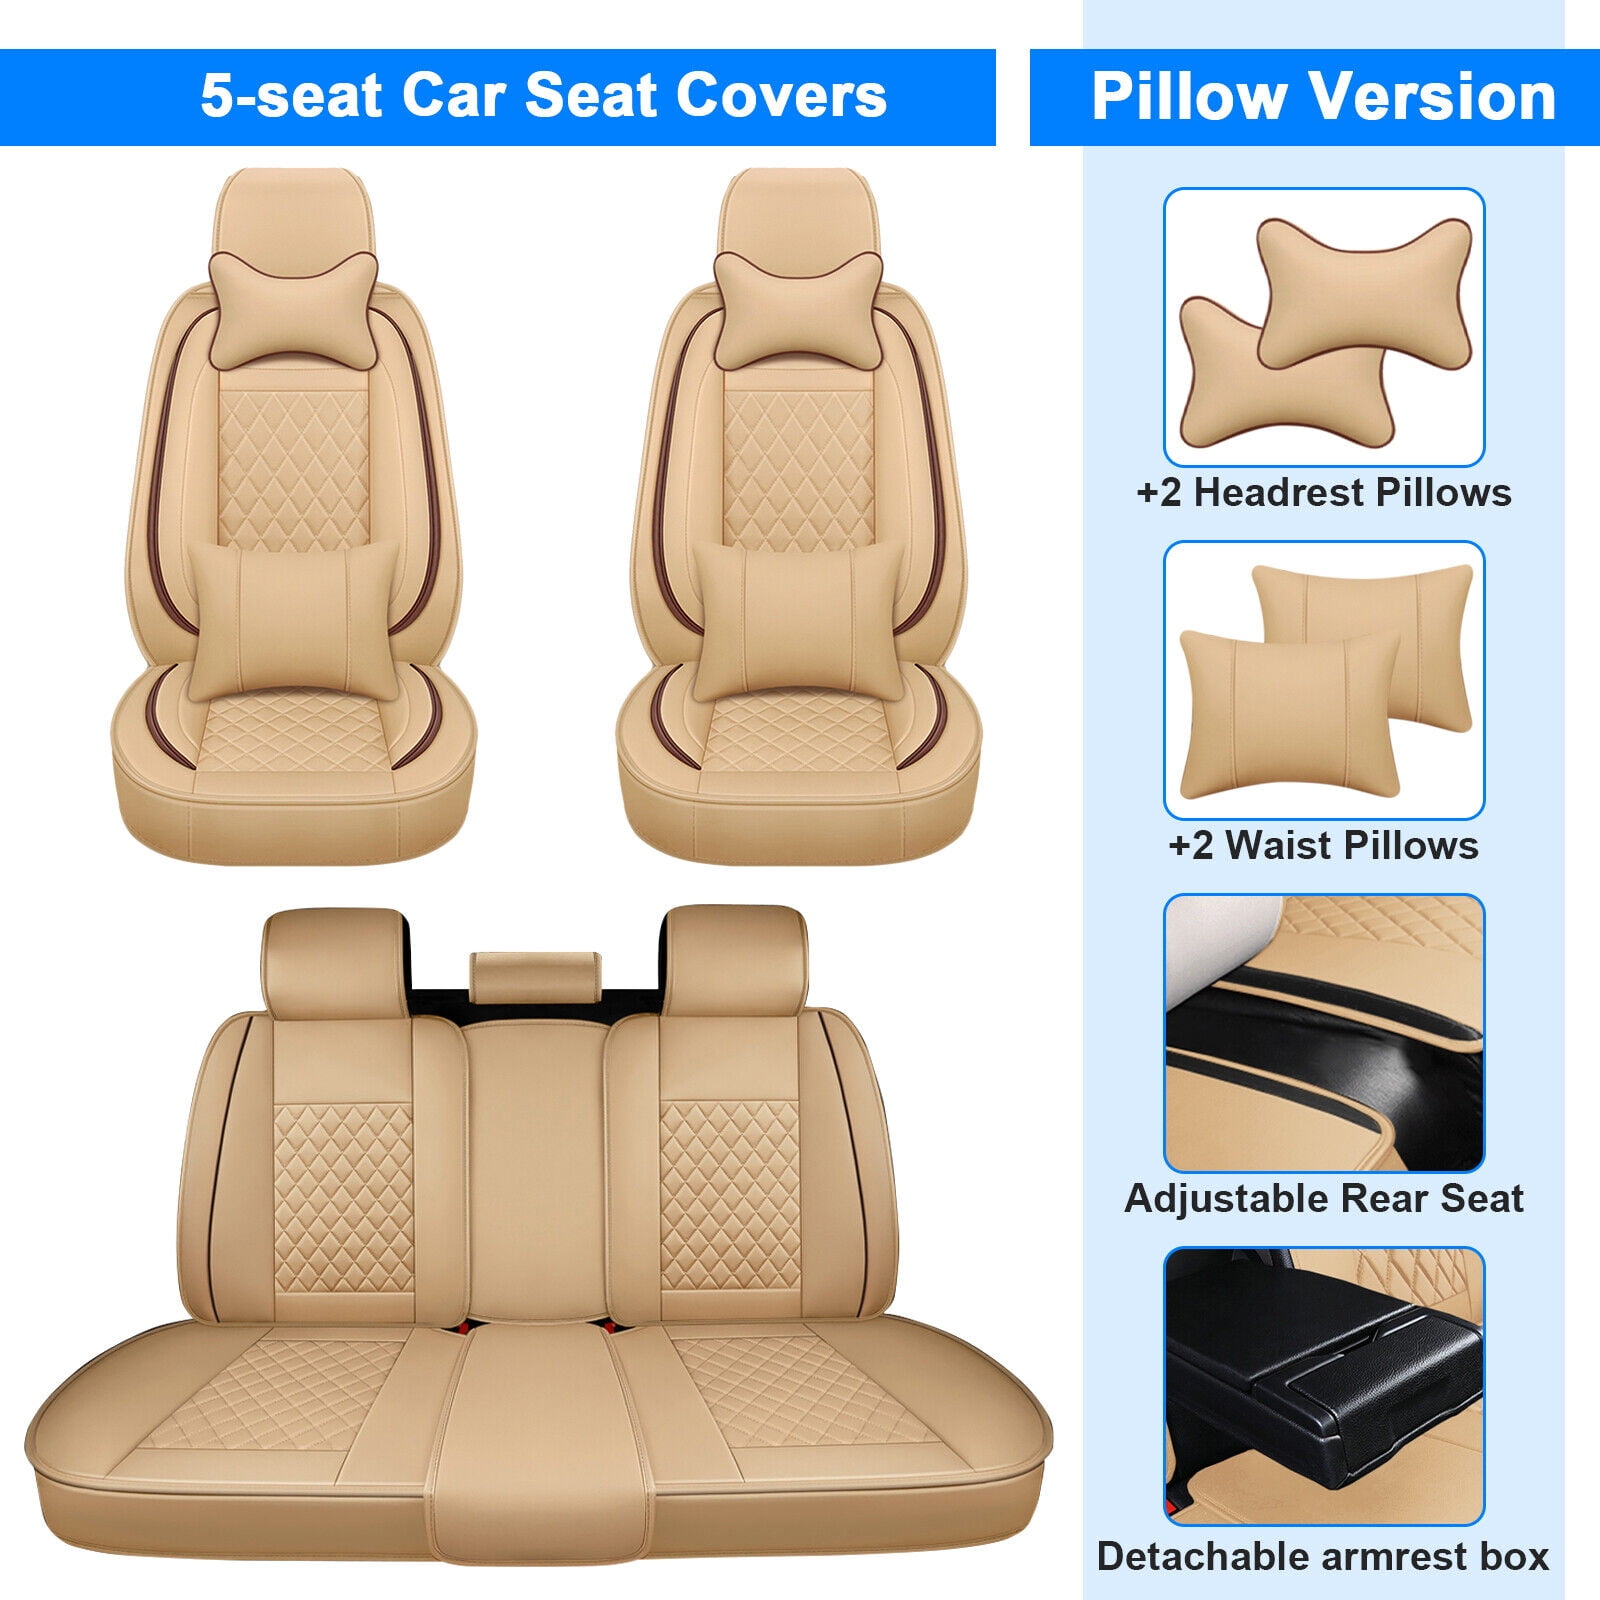  BREMER SITZBEZÜGE Dimensions seat Covers Compatible